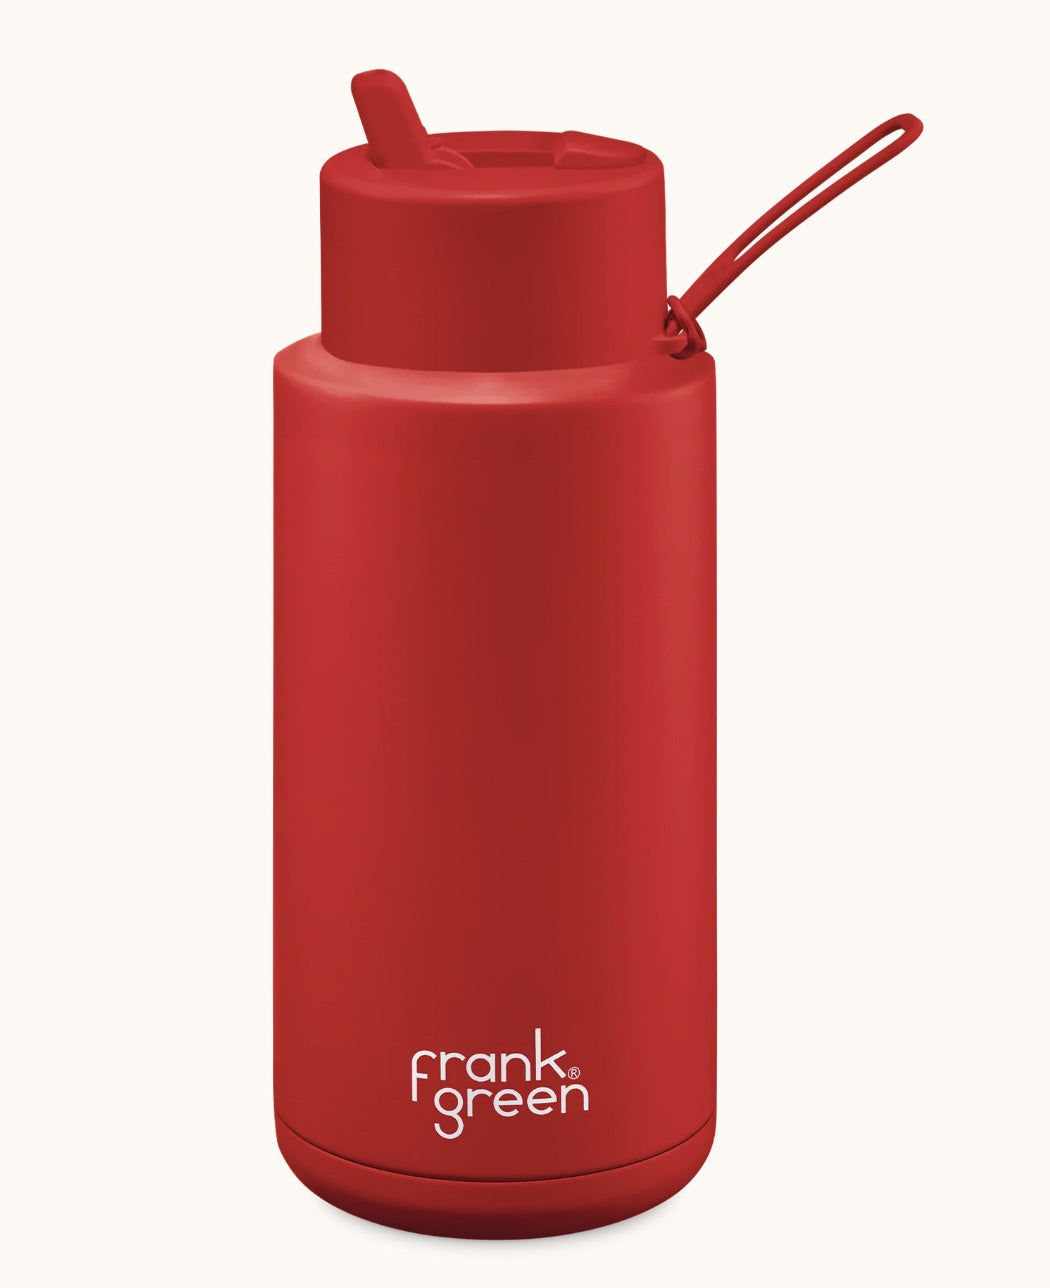 Limited Edition ATOMIC RED 34oz / 1 Ltr Stainless Steer Ceramic Reusable bottle Drink Bottles Frank Green   